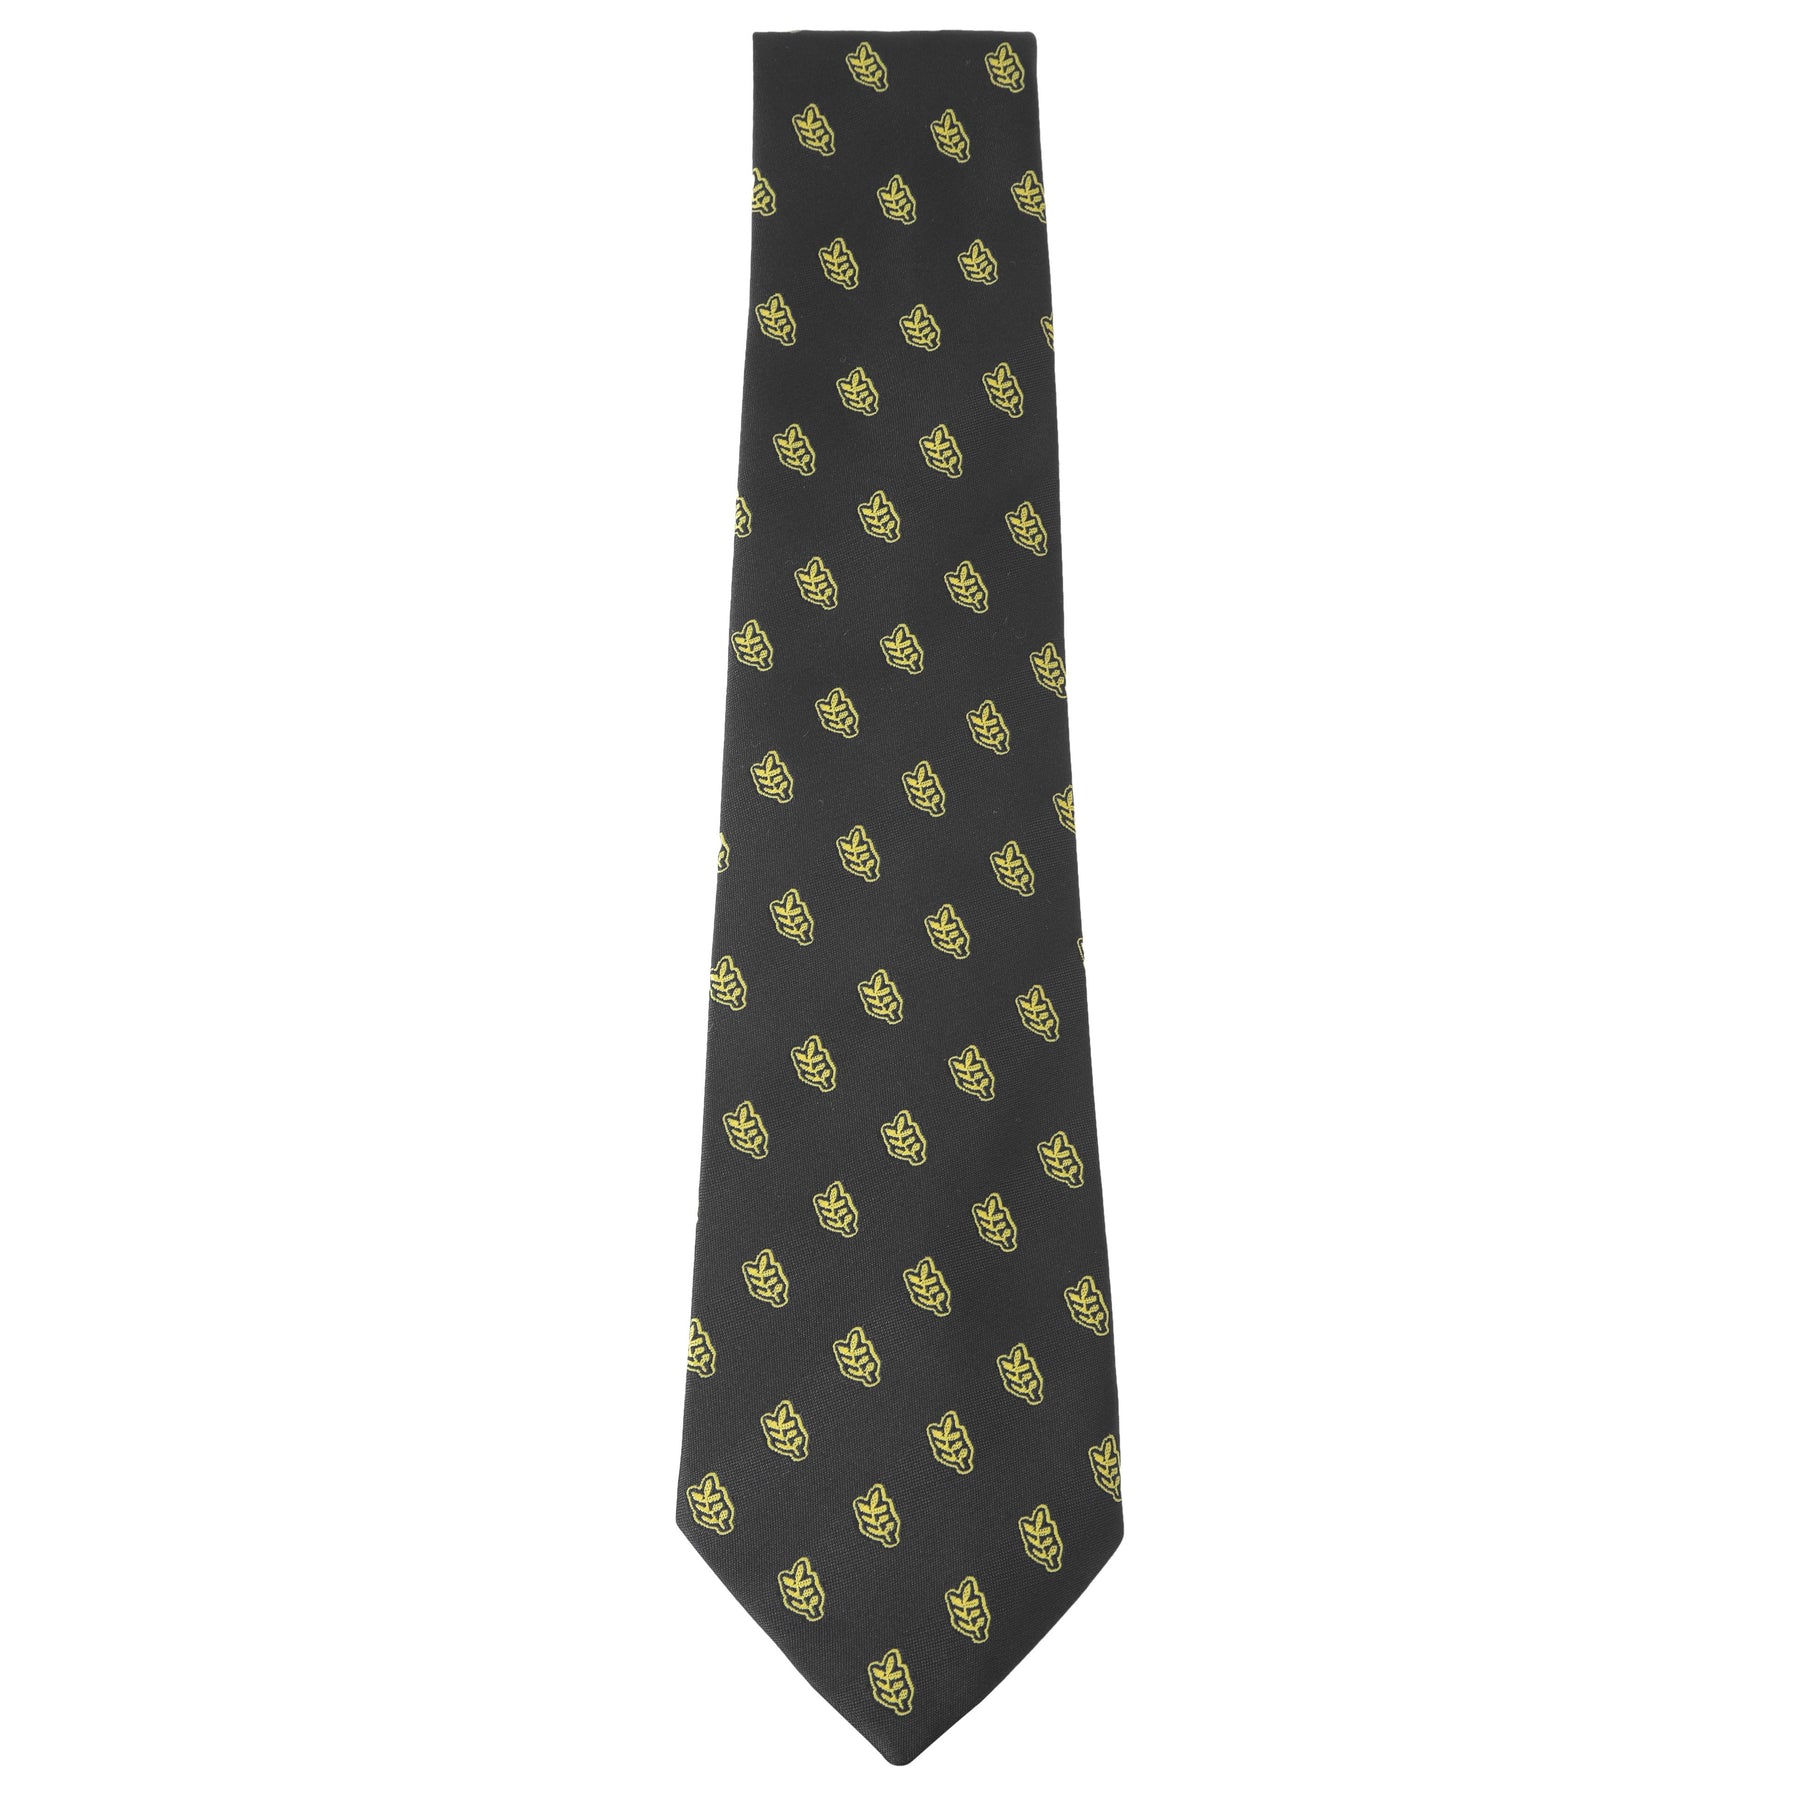 Masonic Necktie - Black With Gold Acacia Leaf - Bricks Masons